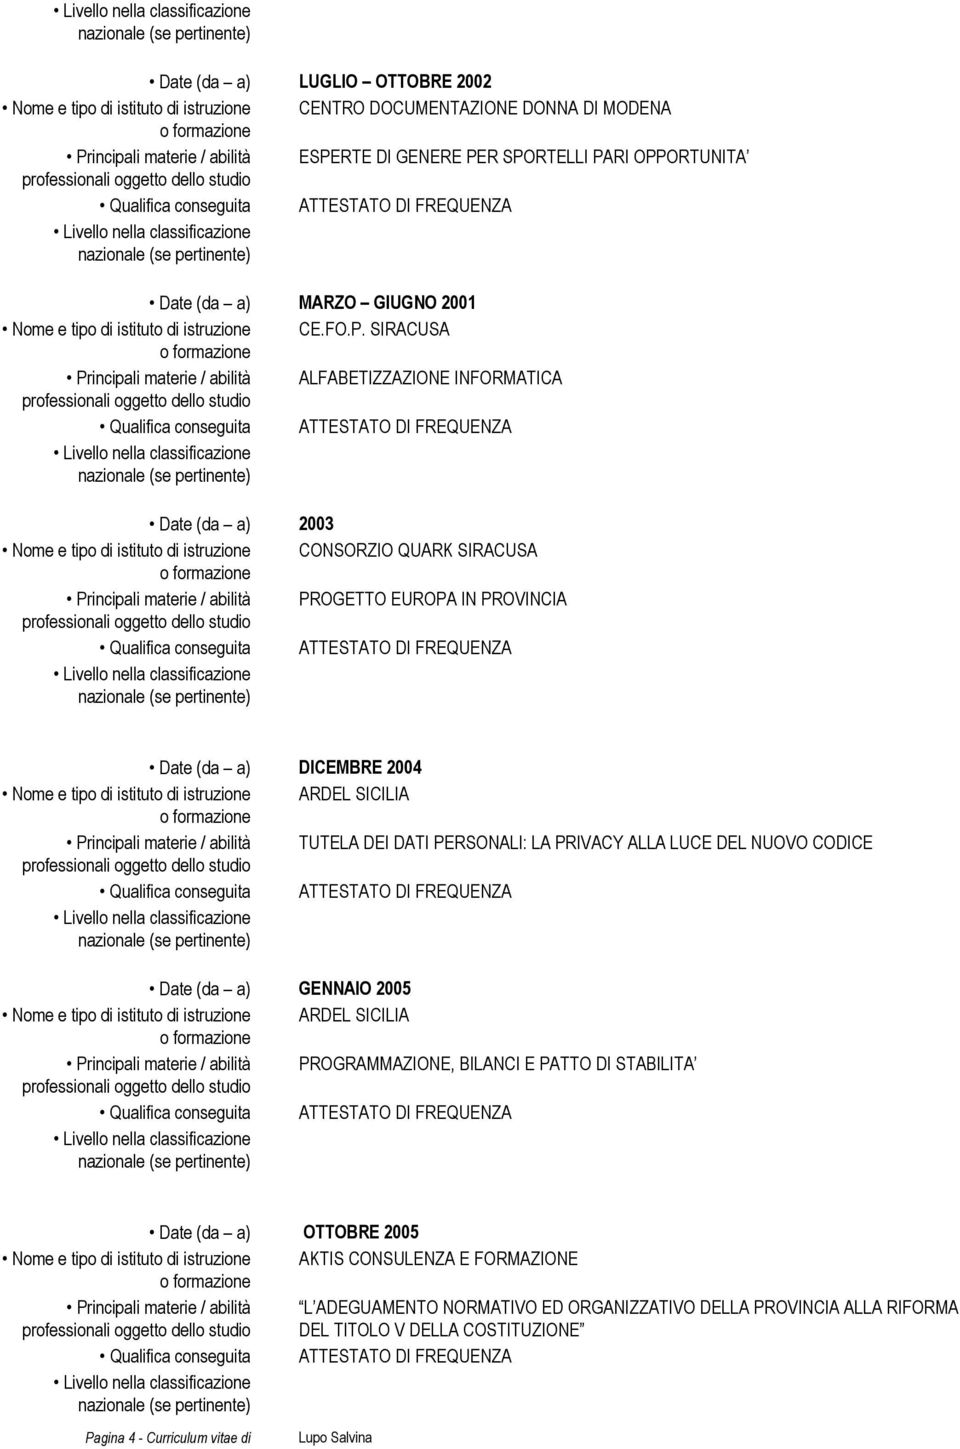 SIRACUSA Principali materie / abilità ALFABETIZZAZIONE INFORMATICA Date (da a) 2003 Nome e tipo di istituto di istruzione CONSORZIO QUARK SIRACUSA Principali materie / abilità PROGETTO EUROPA IN